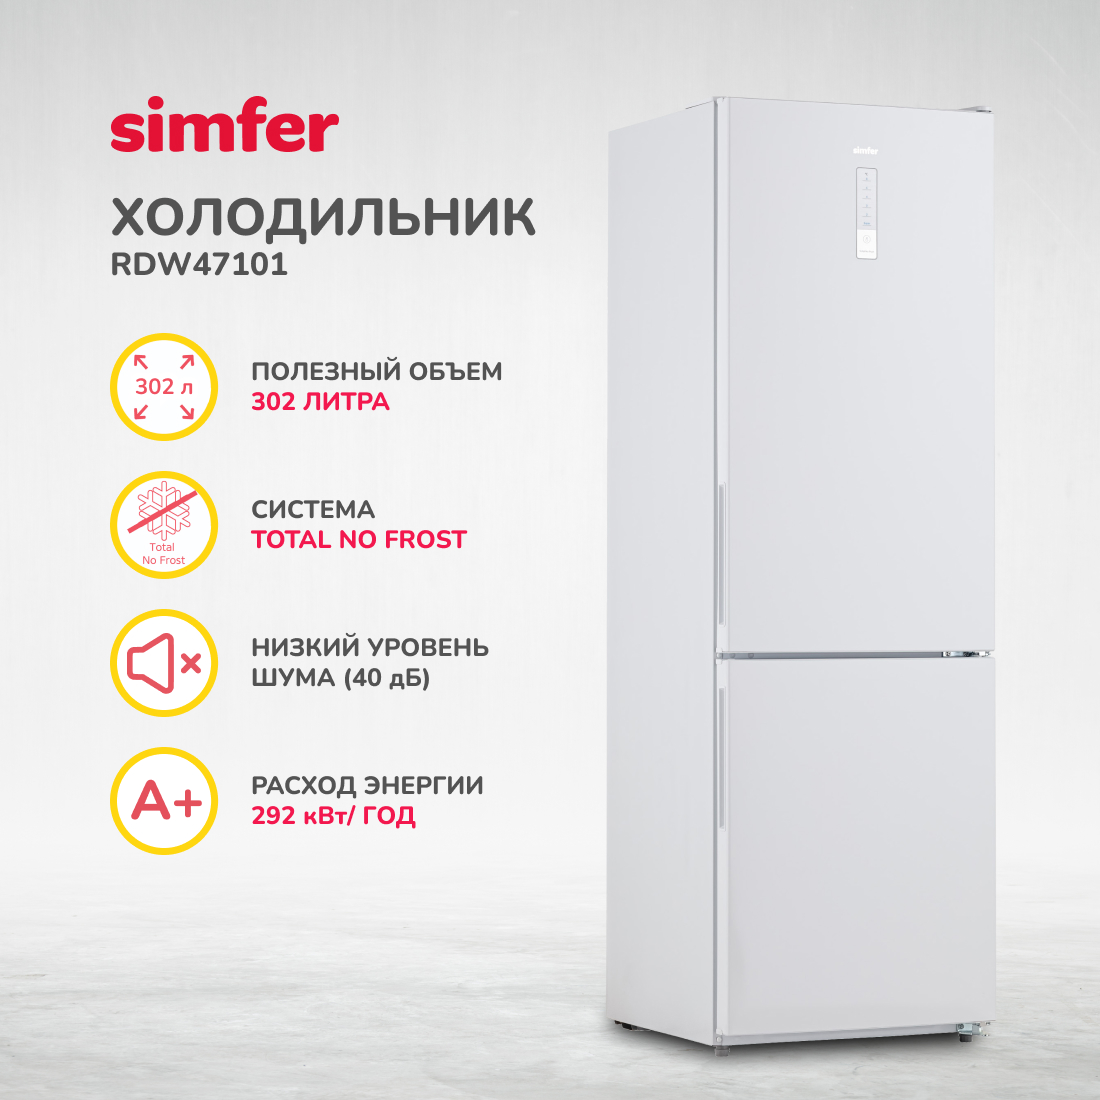 Холодильник Simfer RDW47101, No Frost, двухкамерный, 302 л стул frost pp 8110 белый